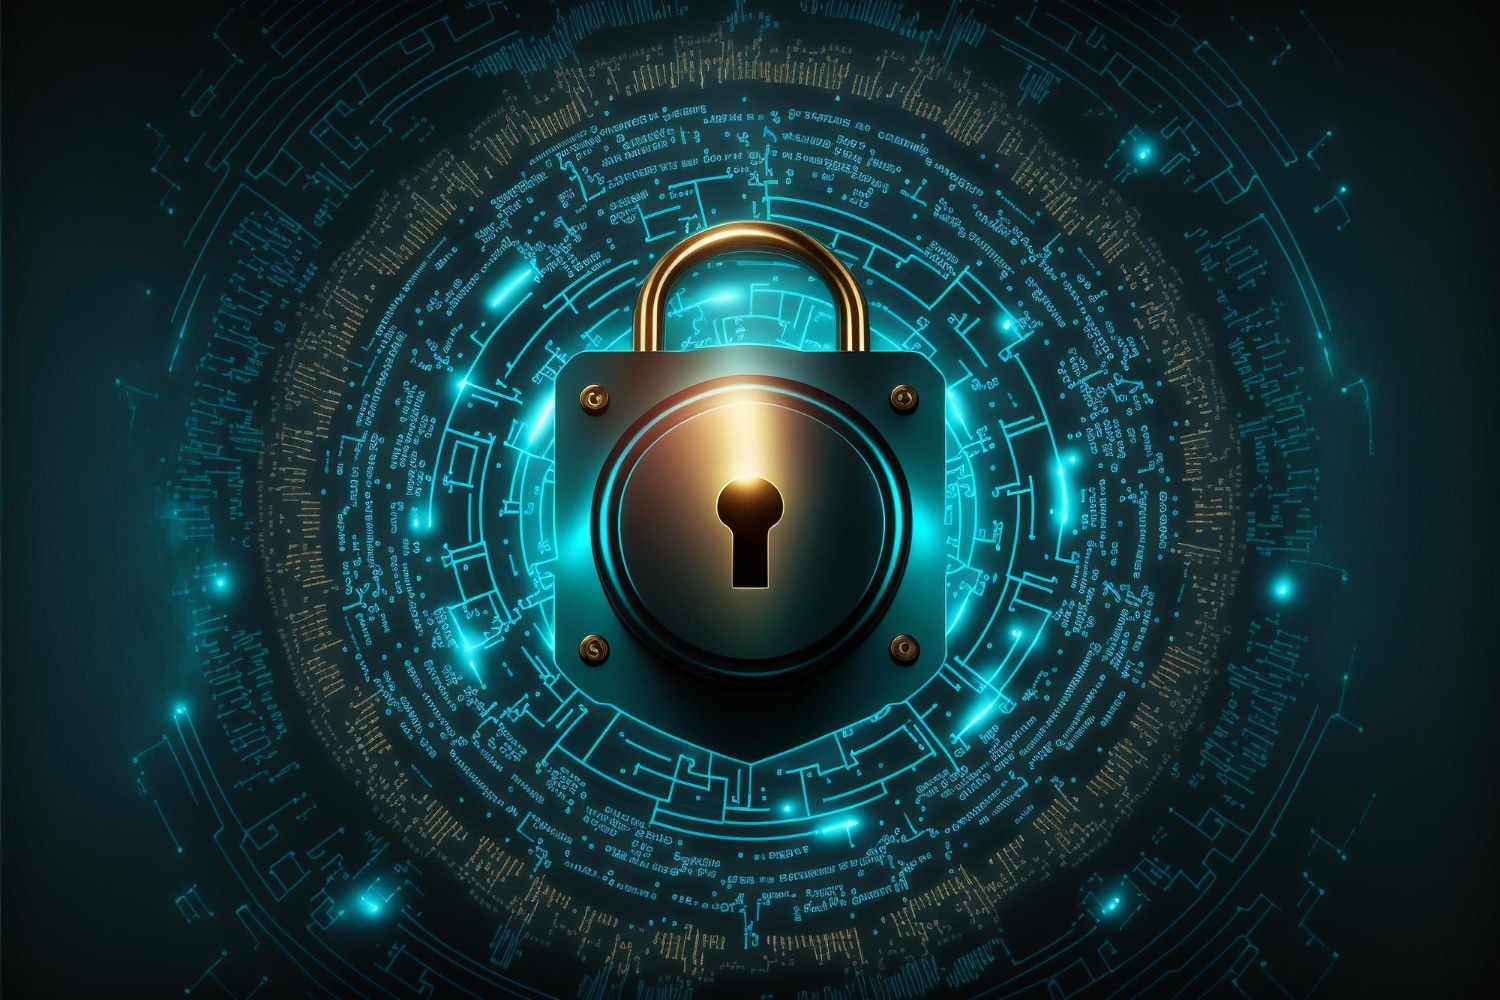 Digital Lock Encryption In A Circular Cybersecurity Pattern